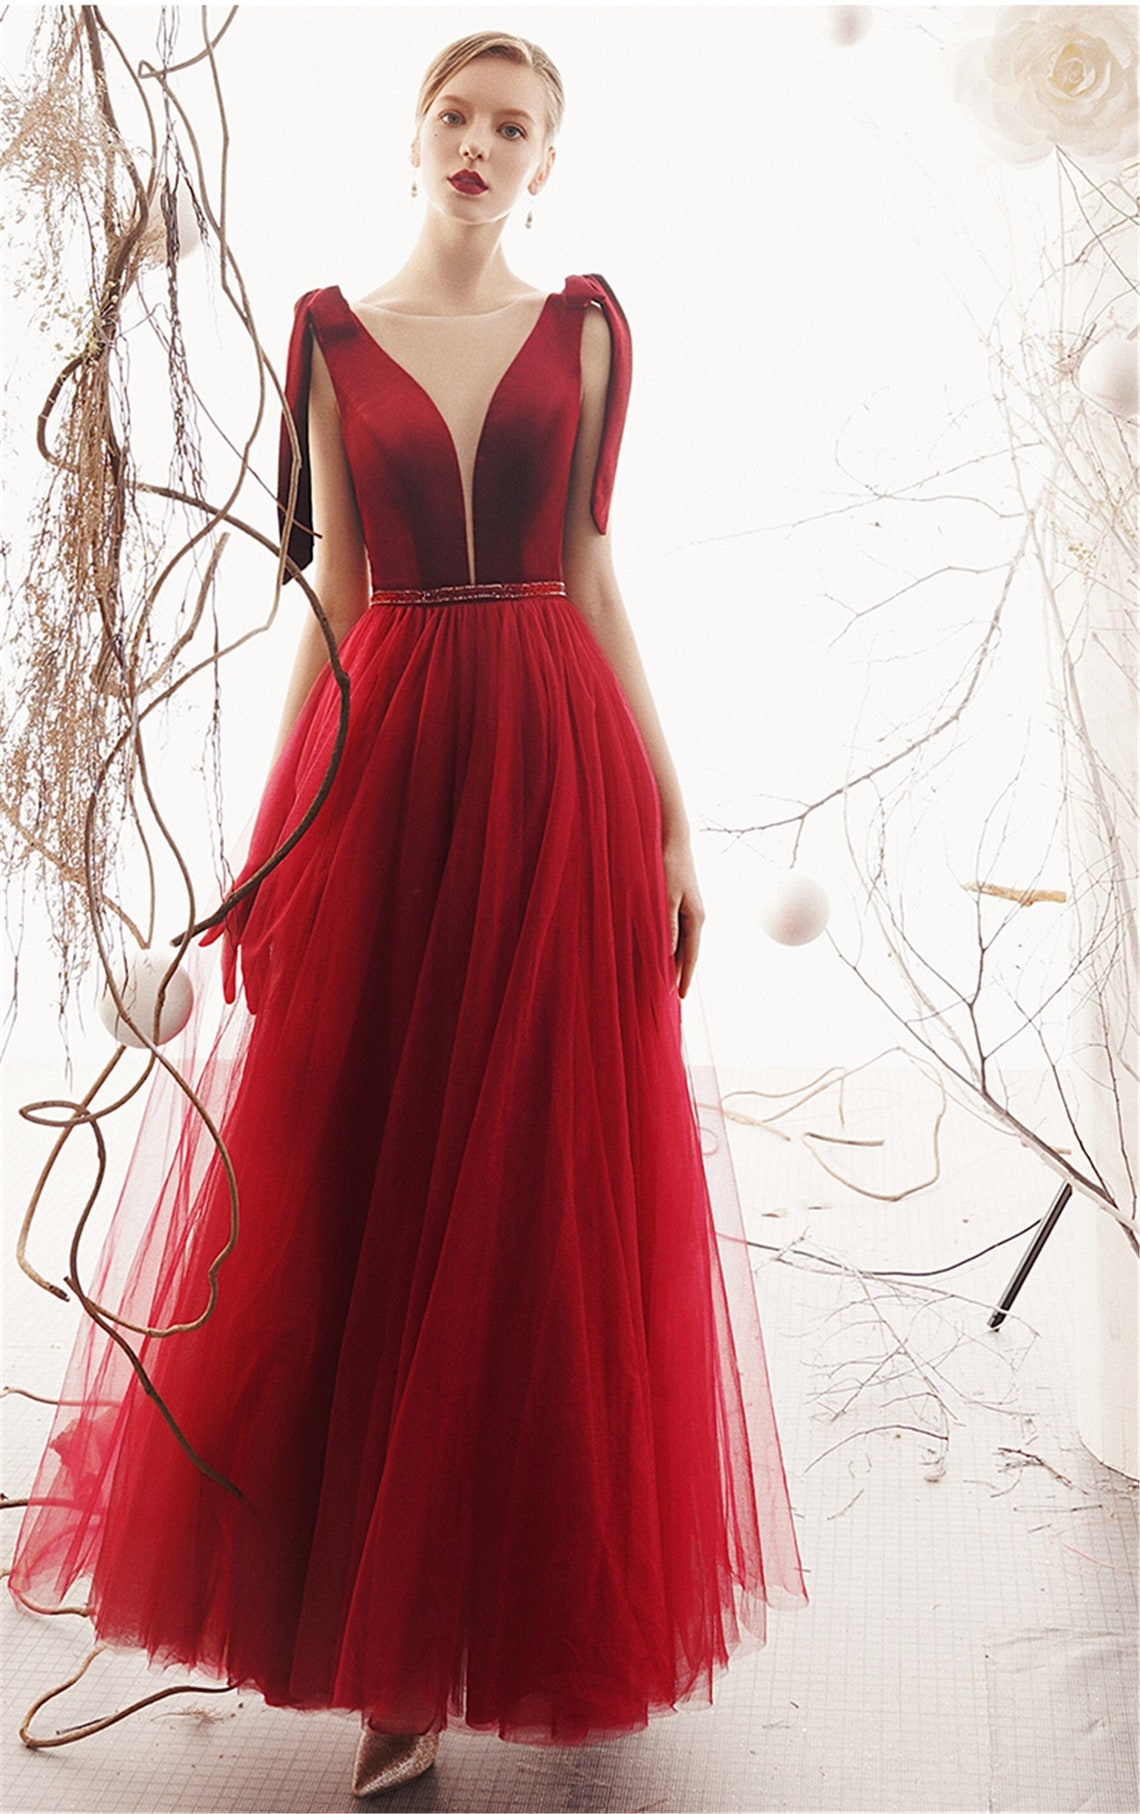 Red Tulle Wedding Store Deep V-Neck Bridal Dress Lace Up Back image 1